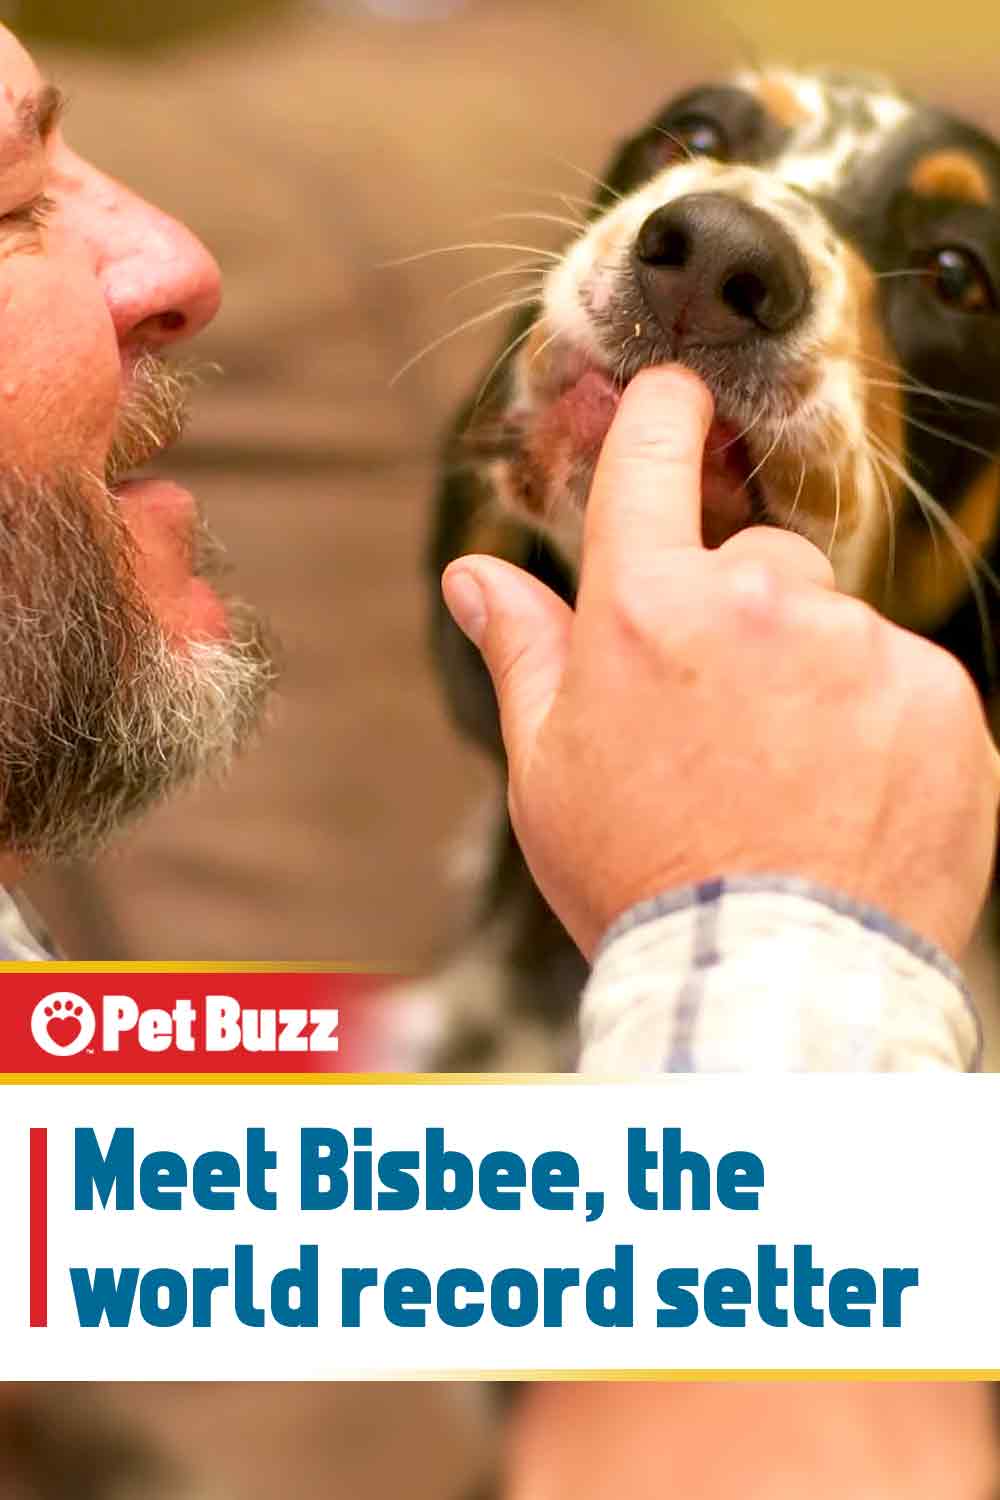 Meet Bisbee, the world record setter